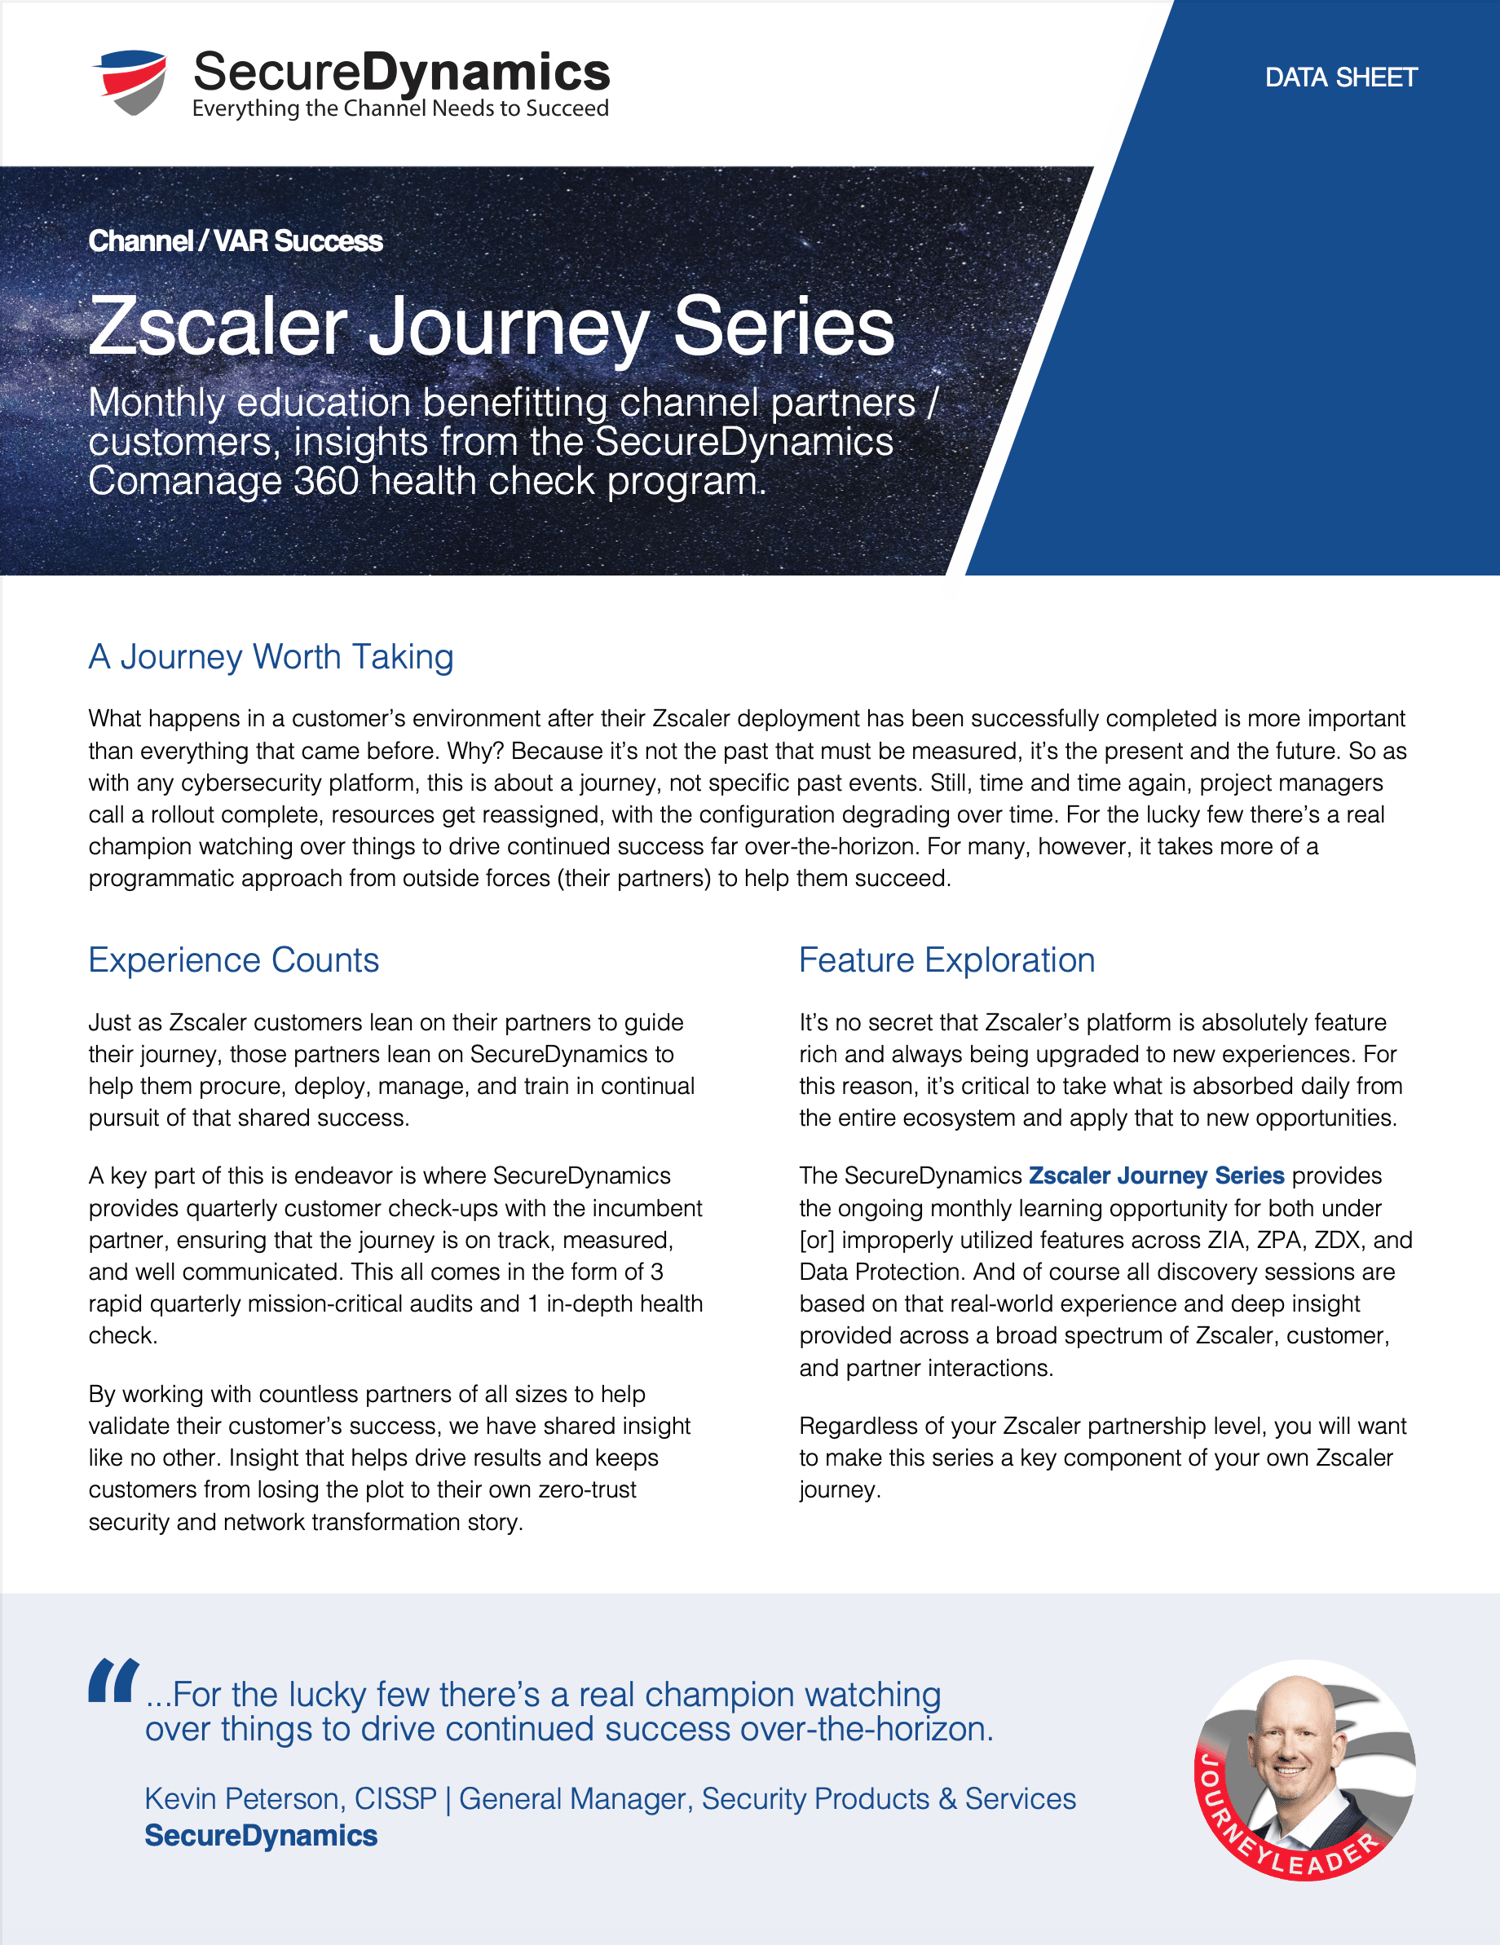 ZS Journey Series